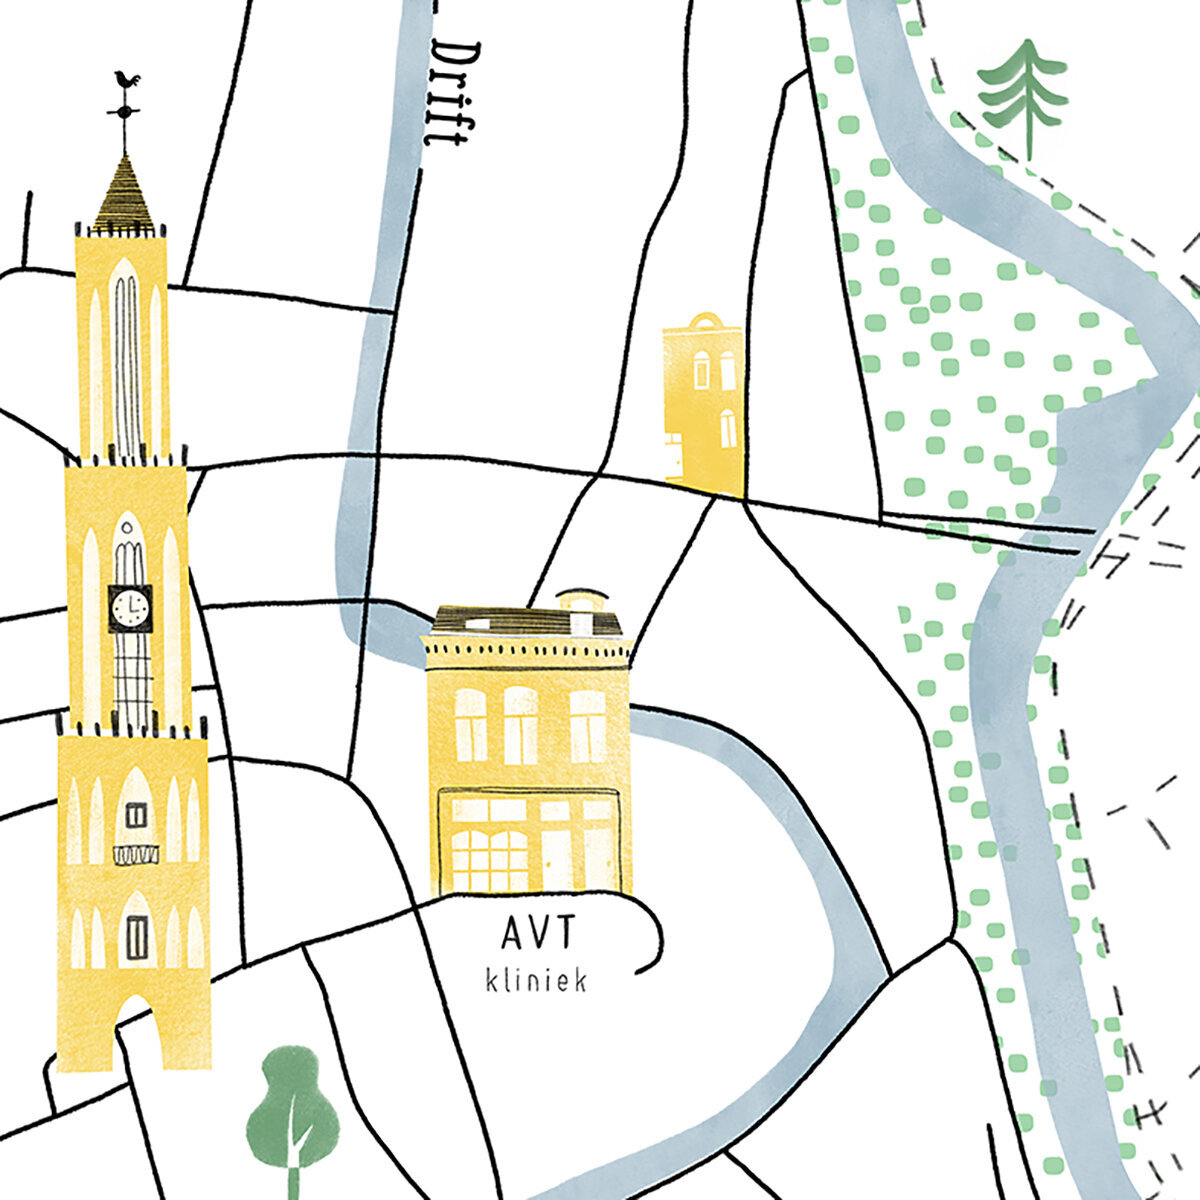 AVT Kliniek - plattegrond detail - illustratieve huisstijl - cracco illustration